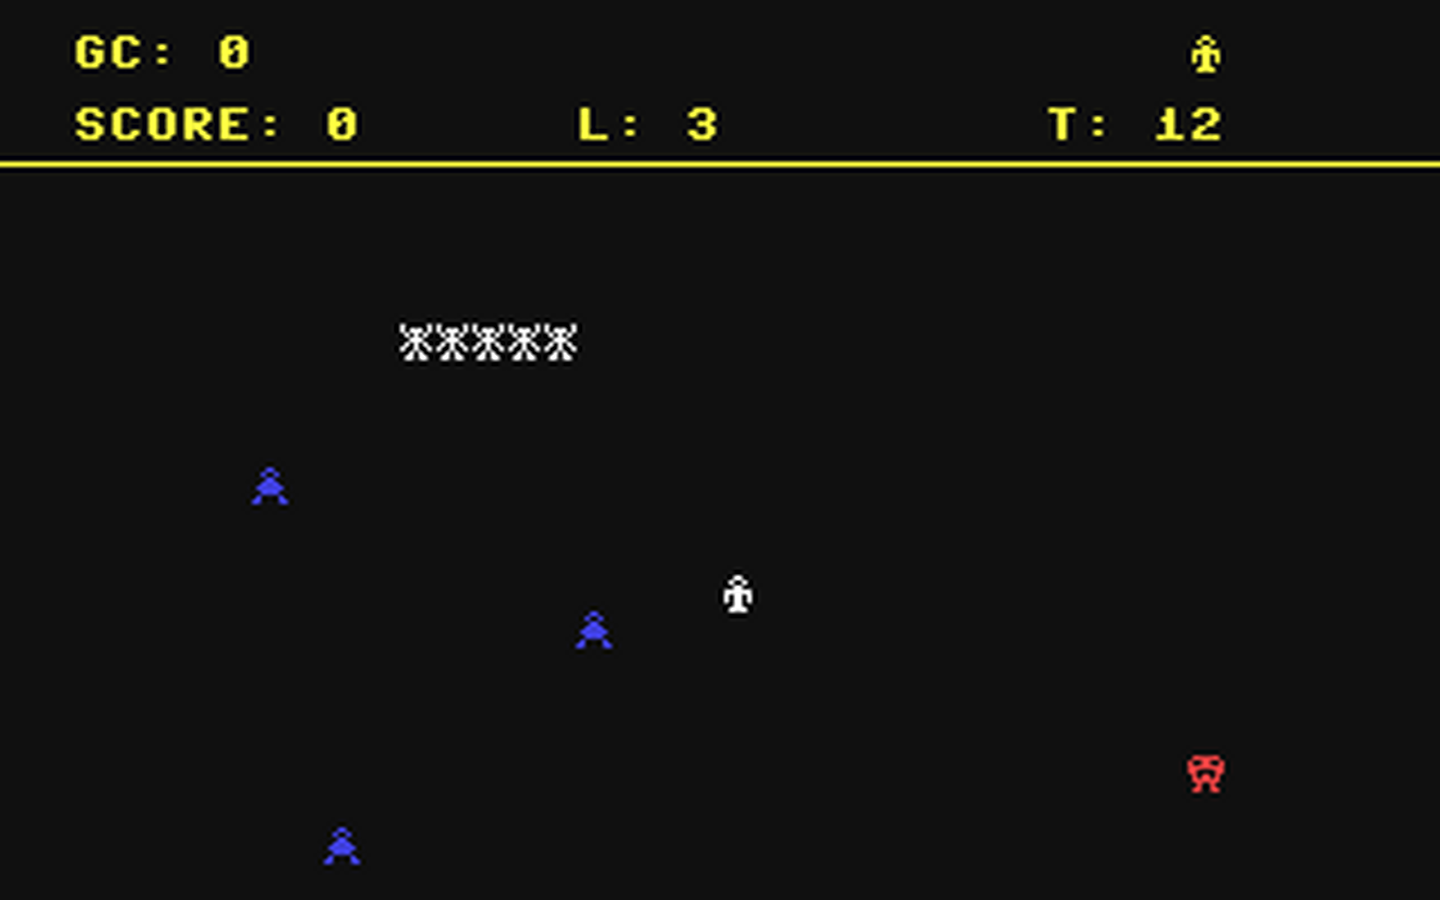 C64 GameBase Things Alpha_Software_Ltd. 1986